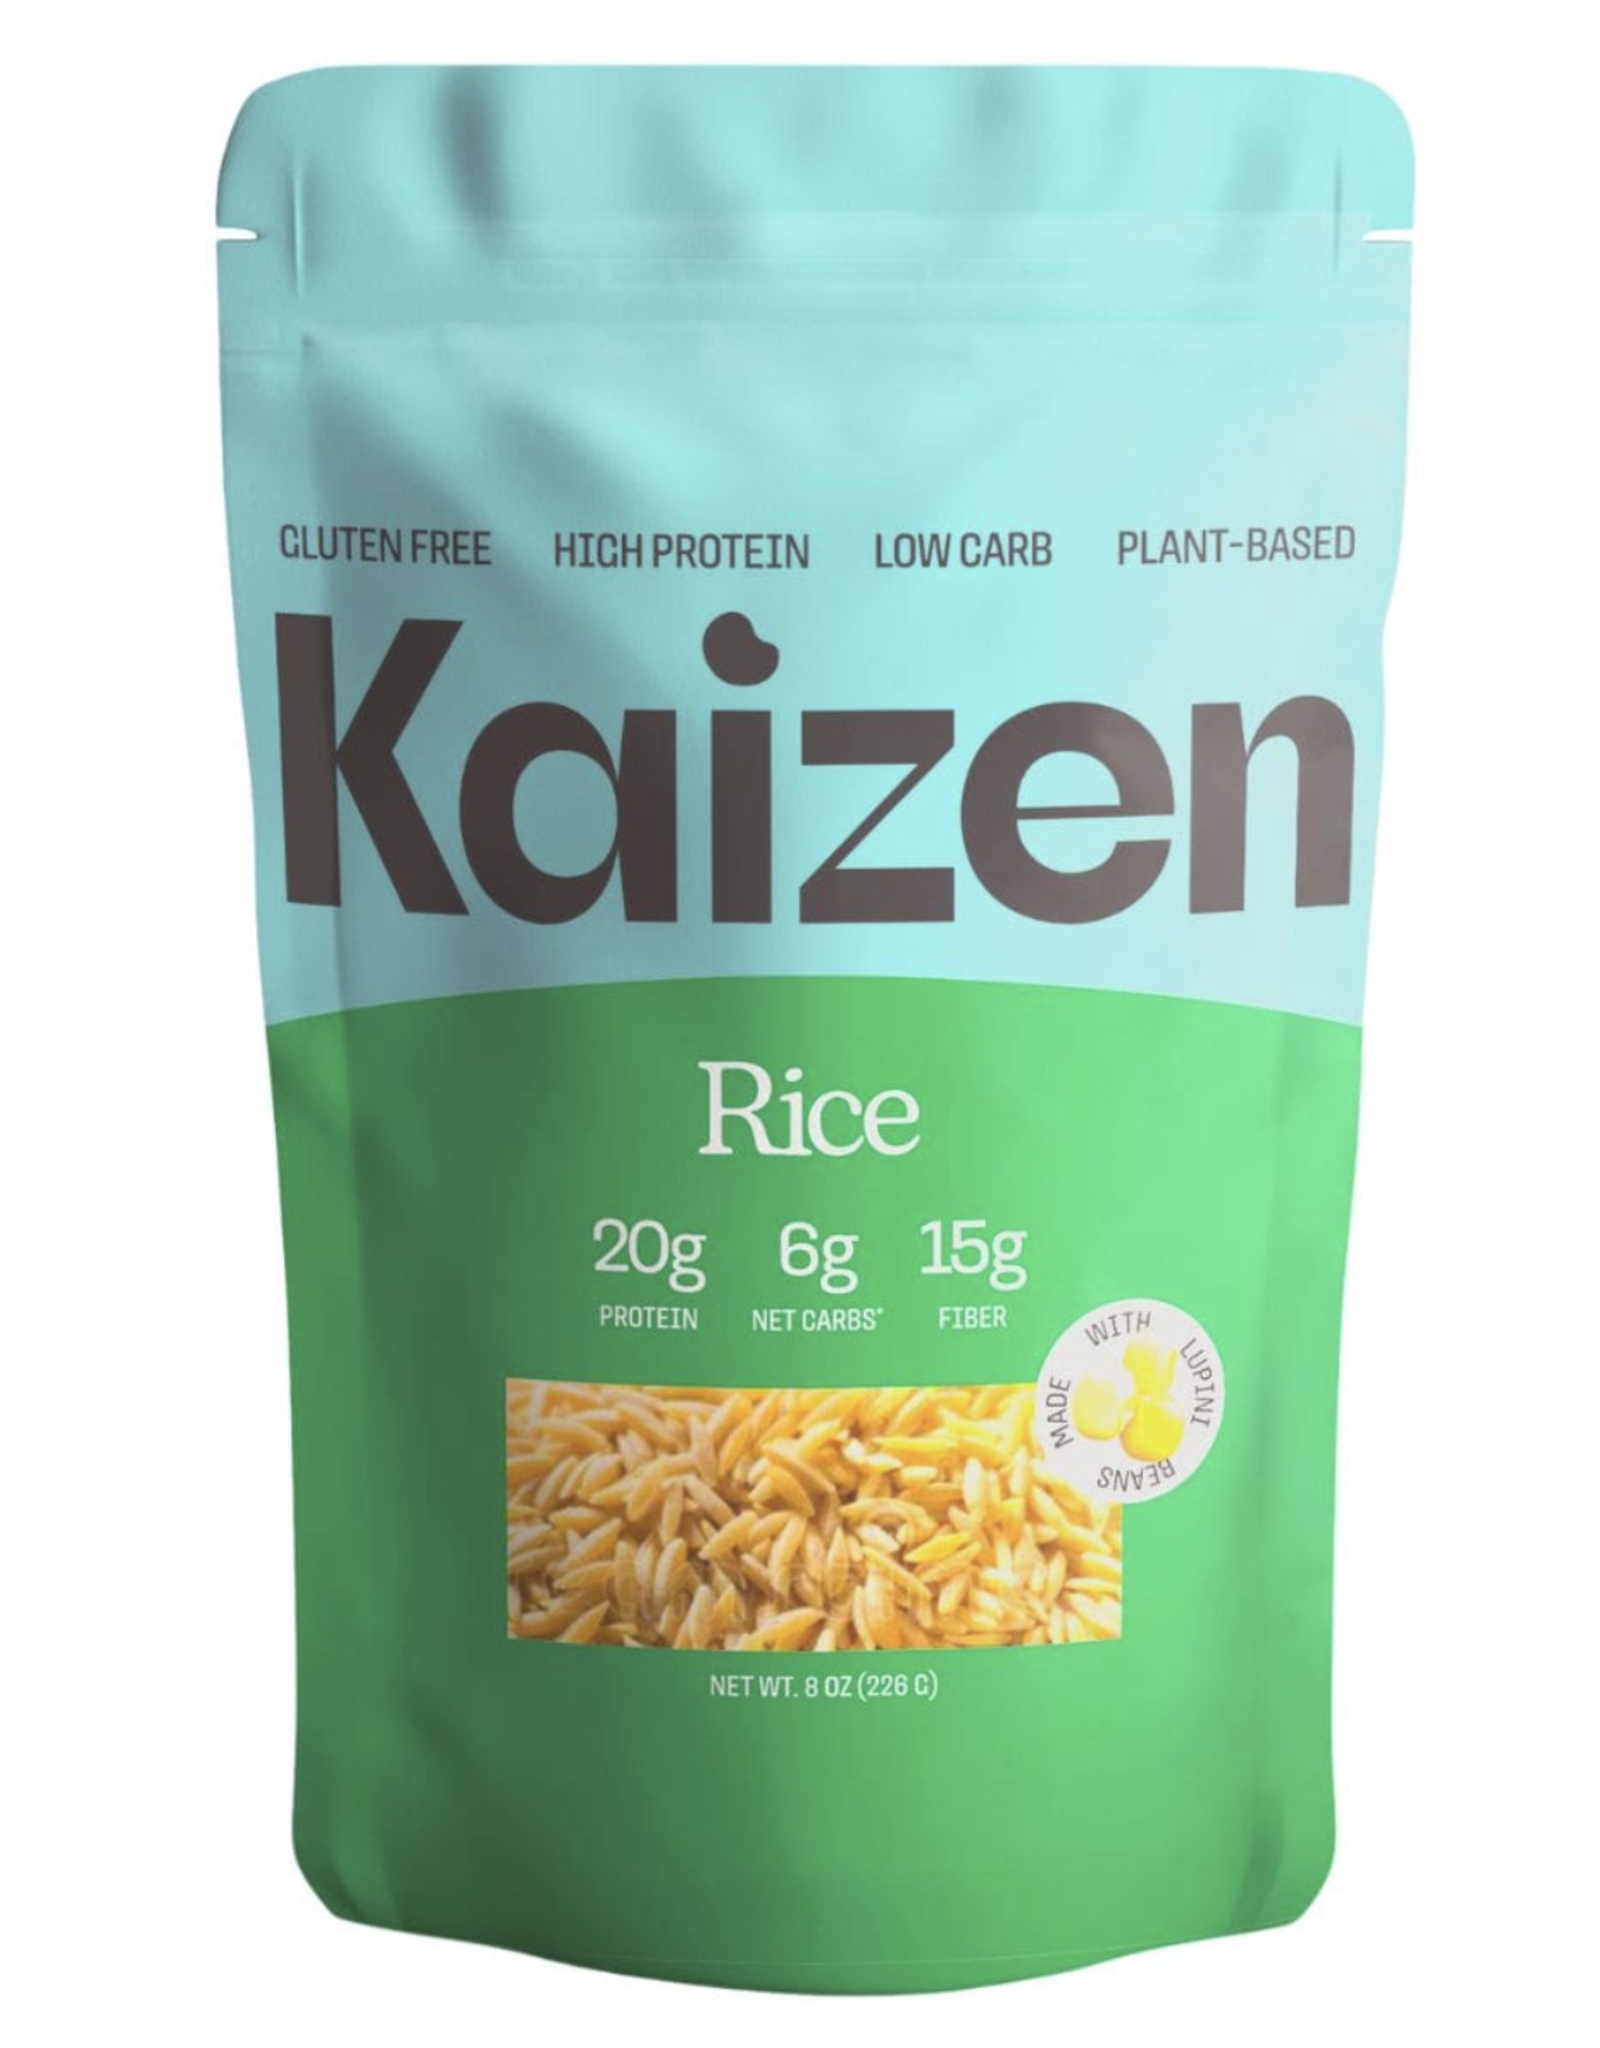 Kaizen Rice Pasta